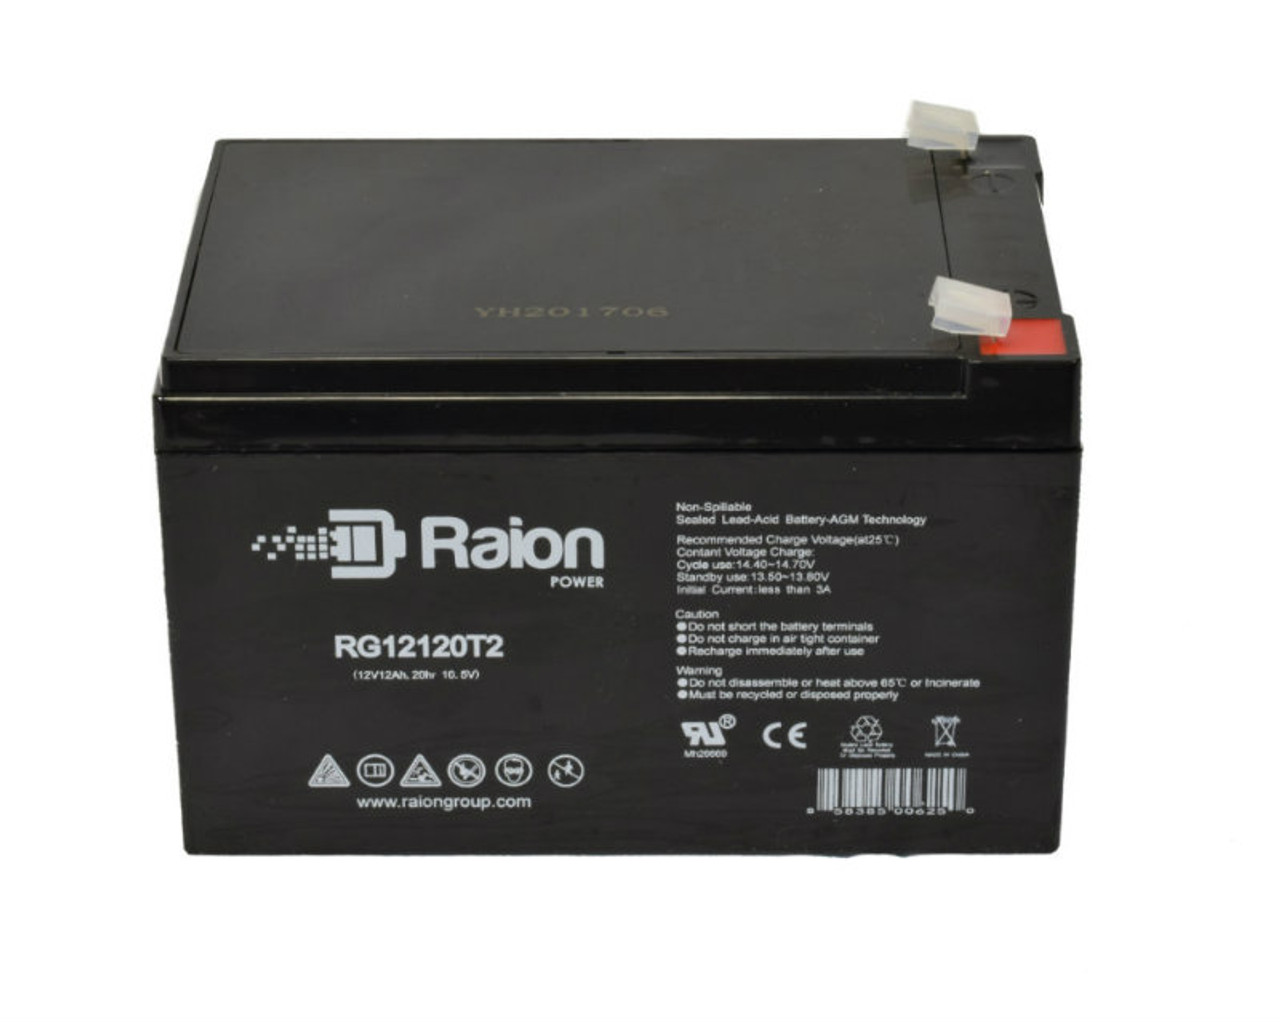 Raion Power RG12120T2 SLA Battery for Daymak Tokyo